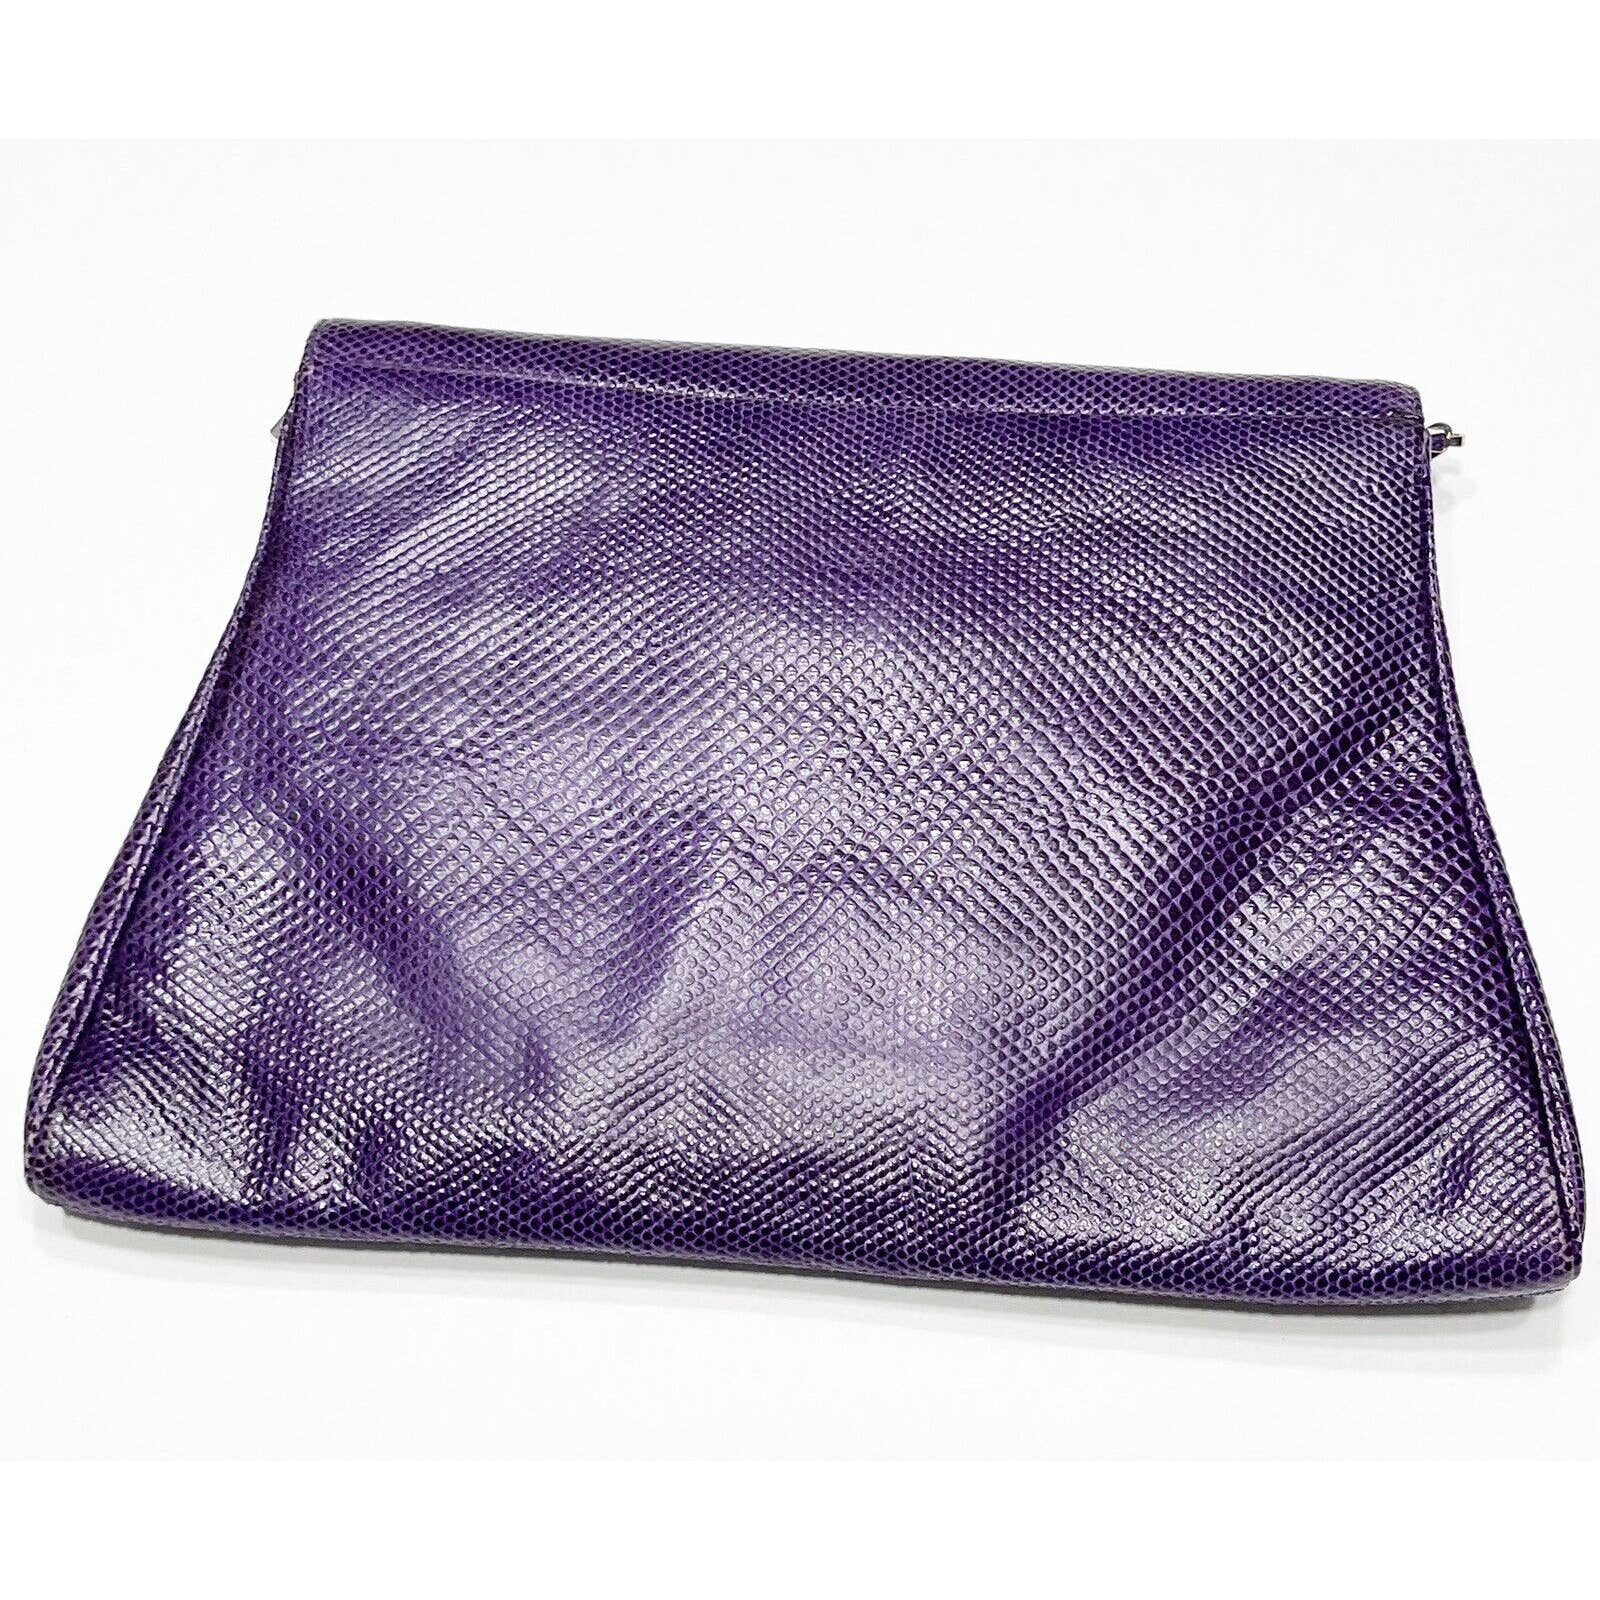 Judith LeiberJudith Leiber Vintage Purple Lizard Rhinestone Handbag Purse Clutch Silvertone - Black Dog Vintage